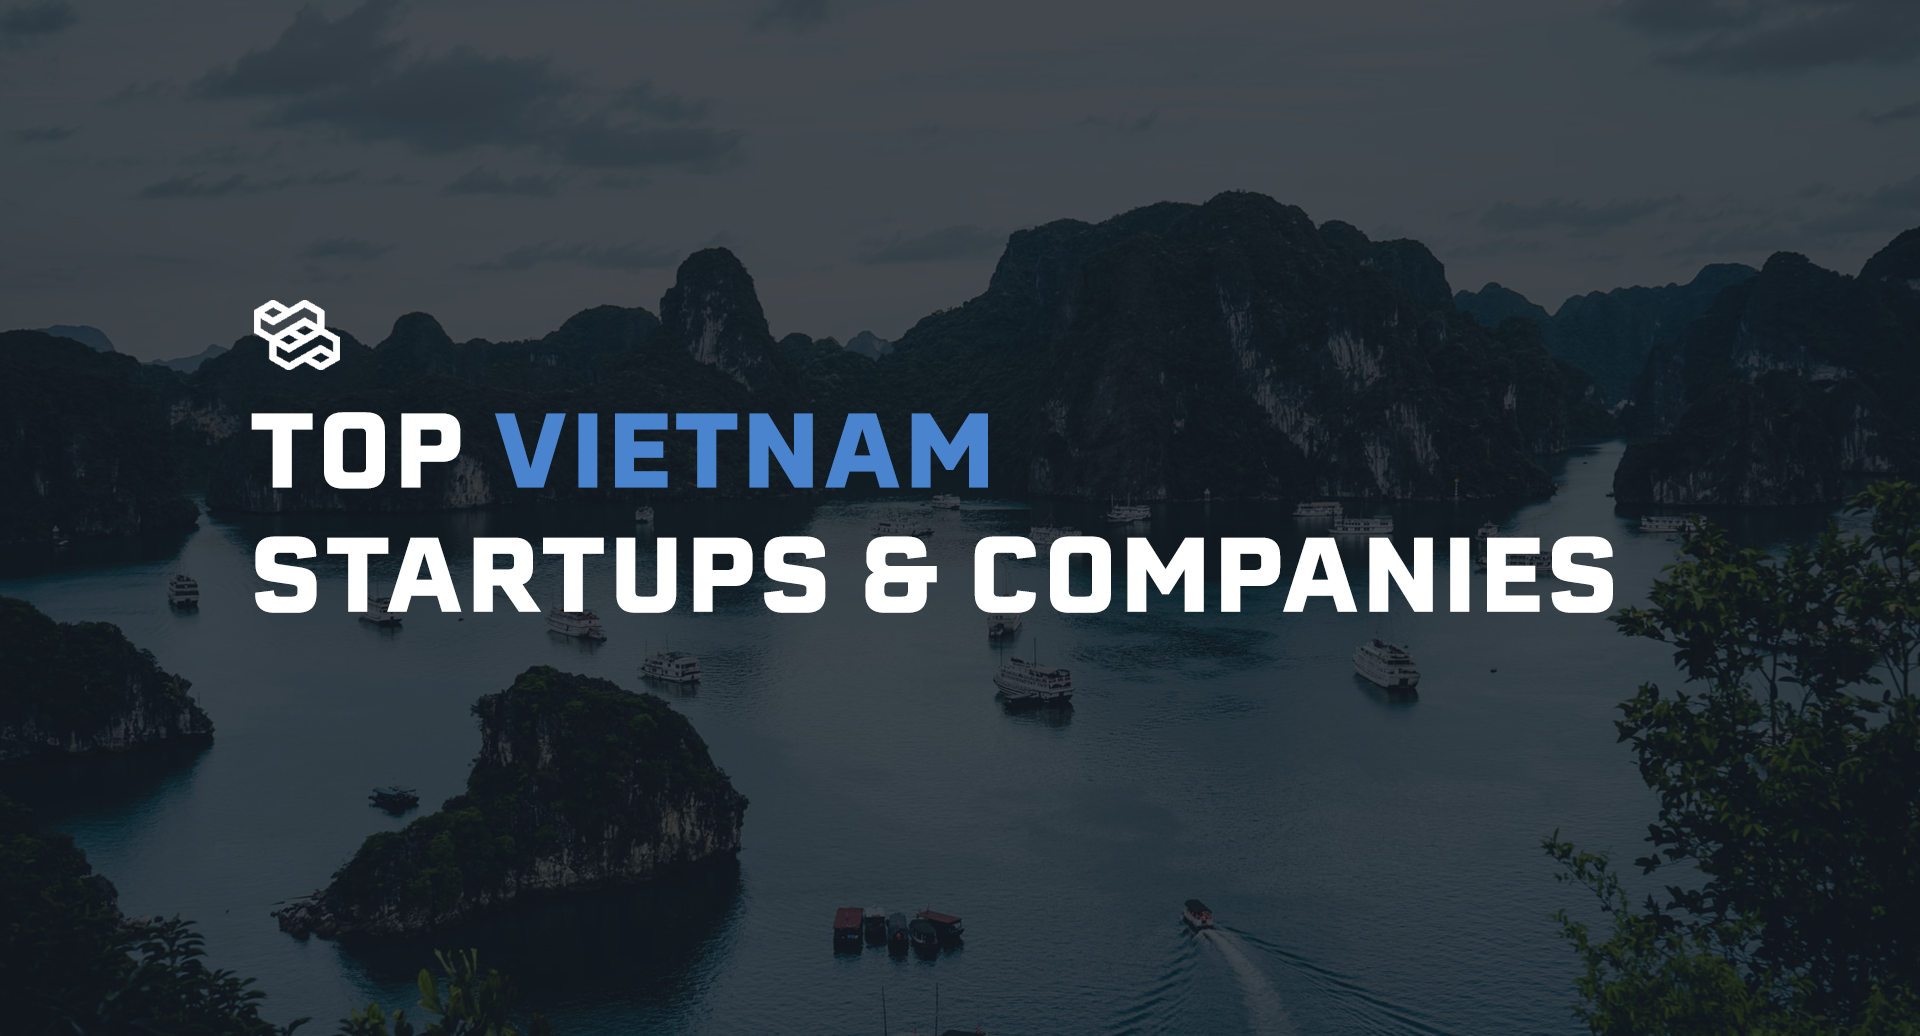 101 Top Vietnam Information Technology Companies and Startups